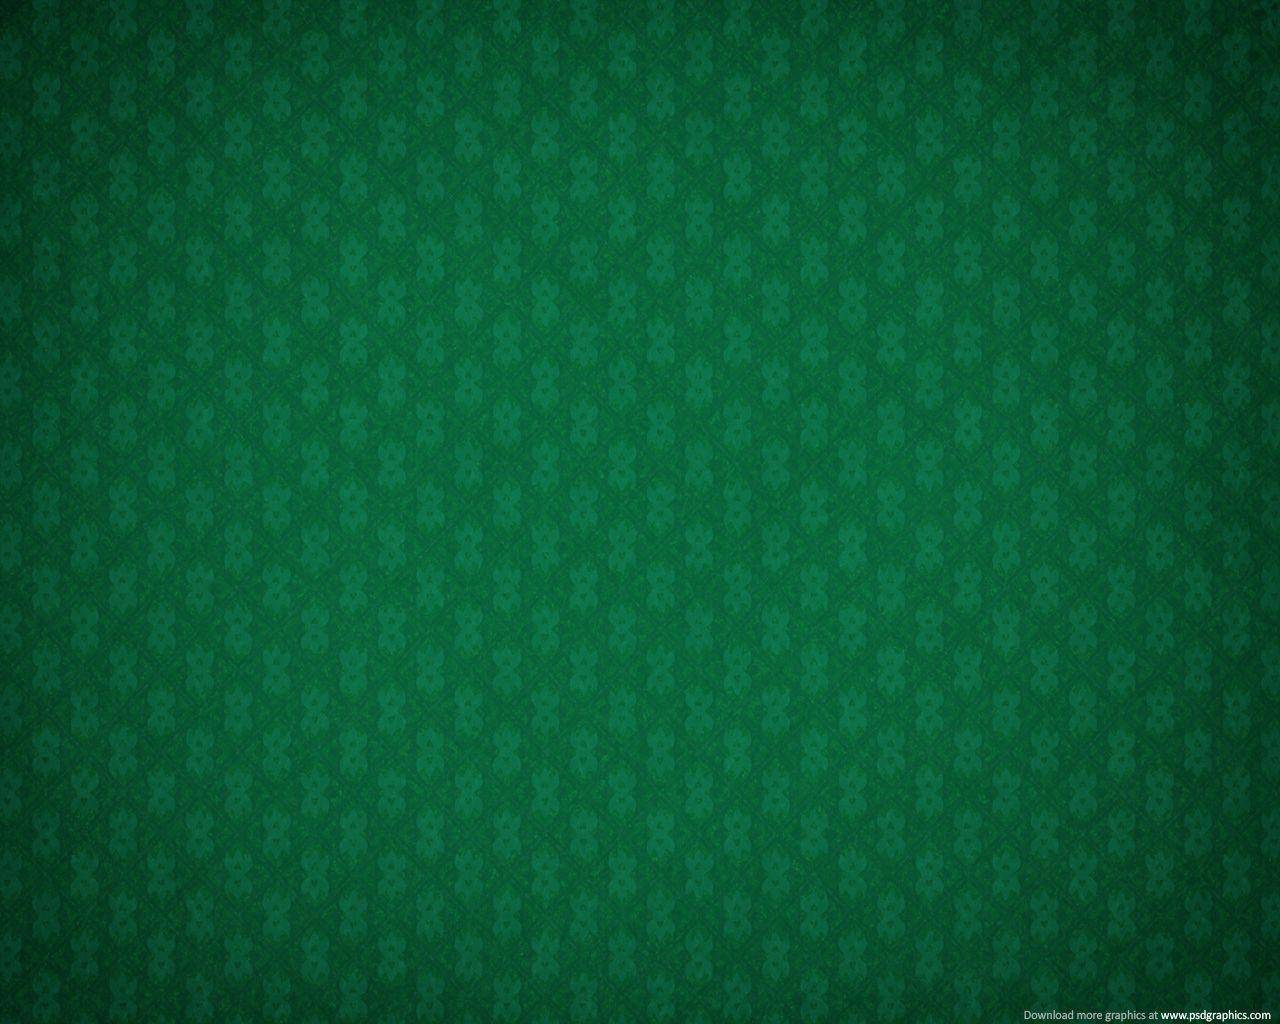 Green grunge pattern